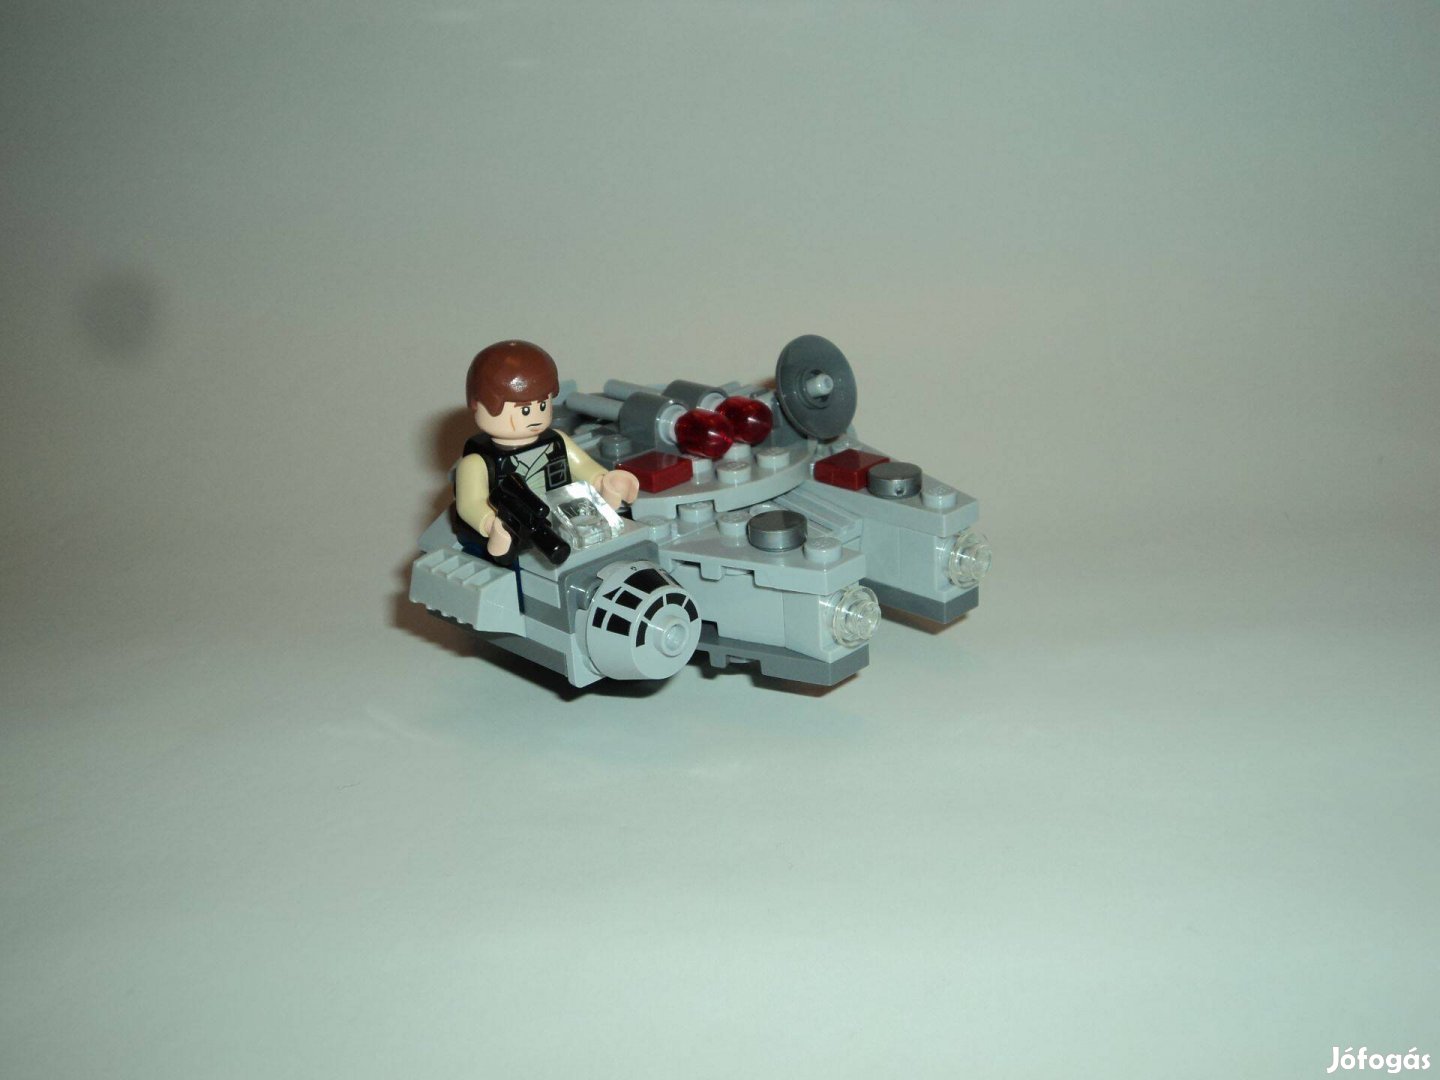 LEGO Star Wars 75030 Millennium Falcon Microfighter